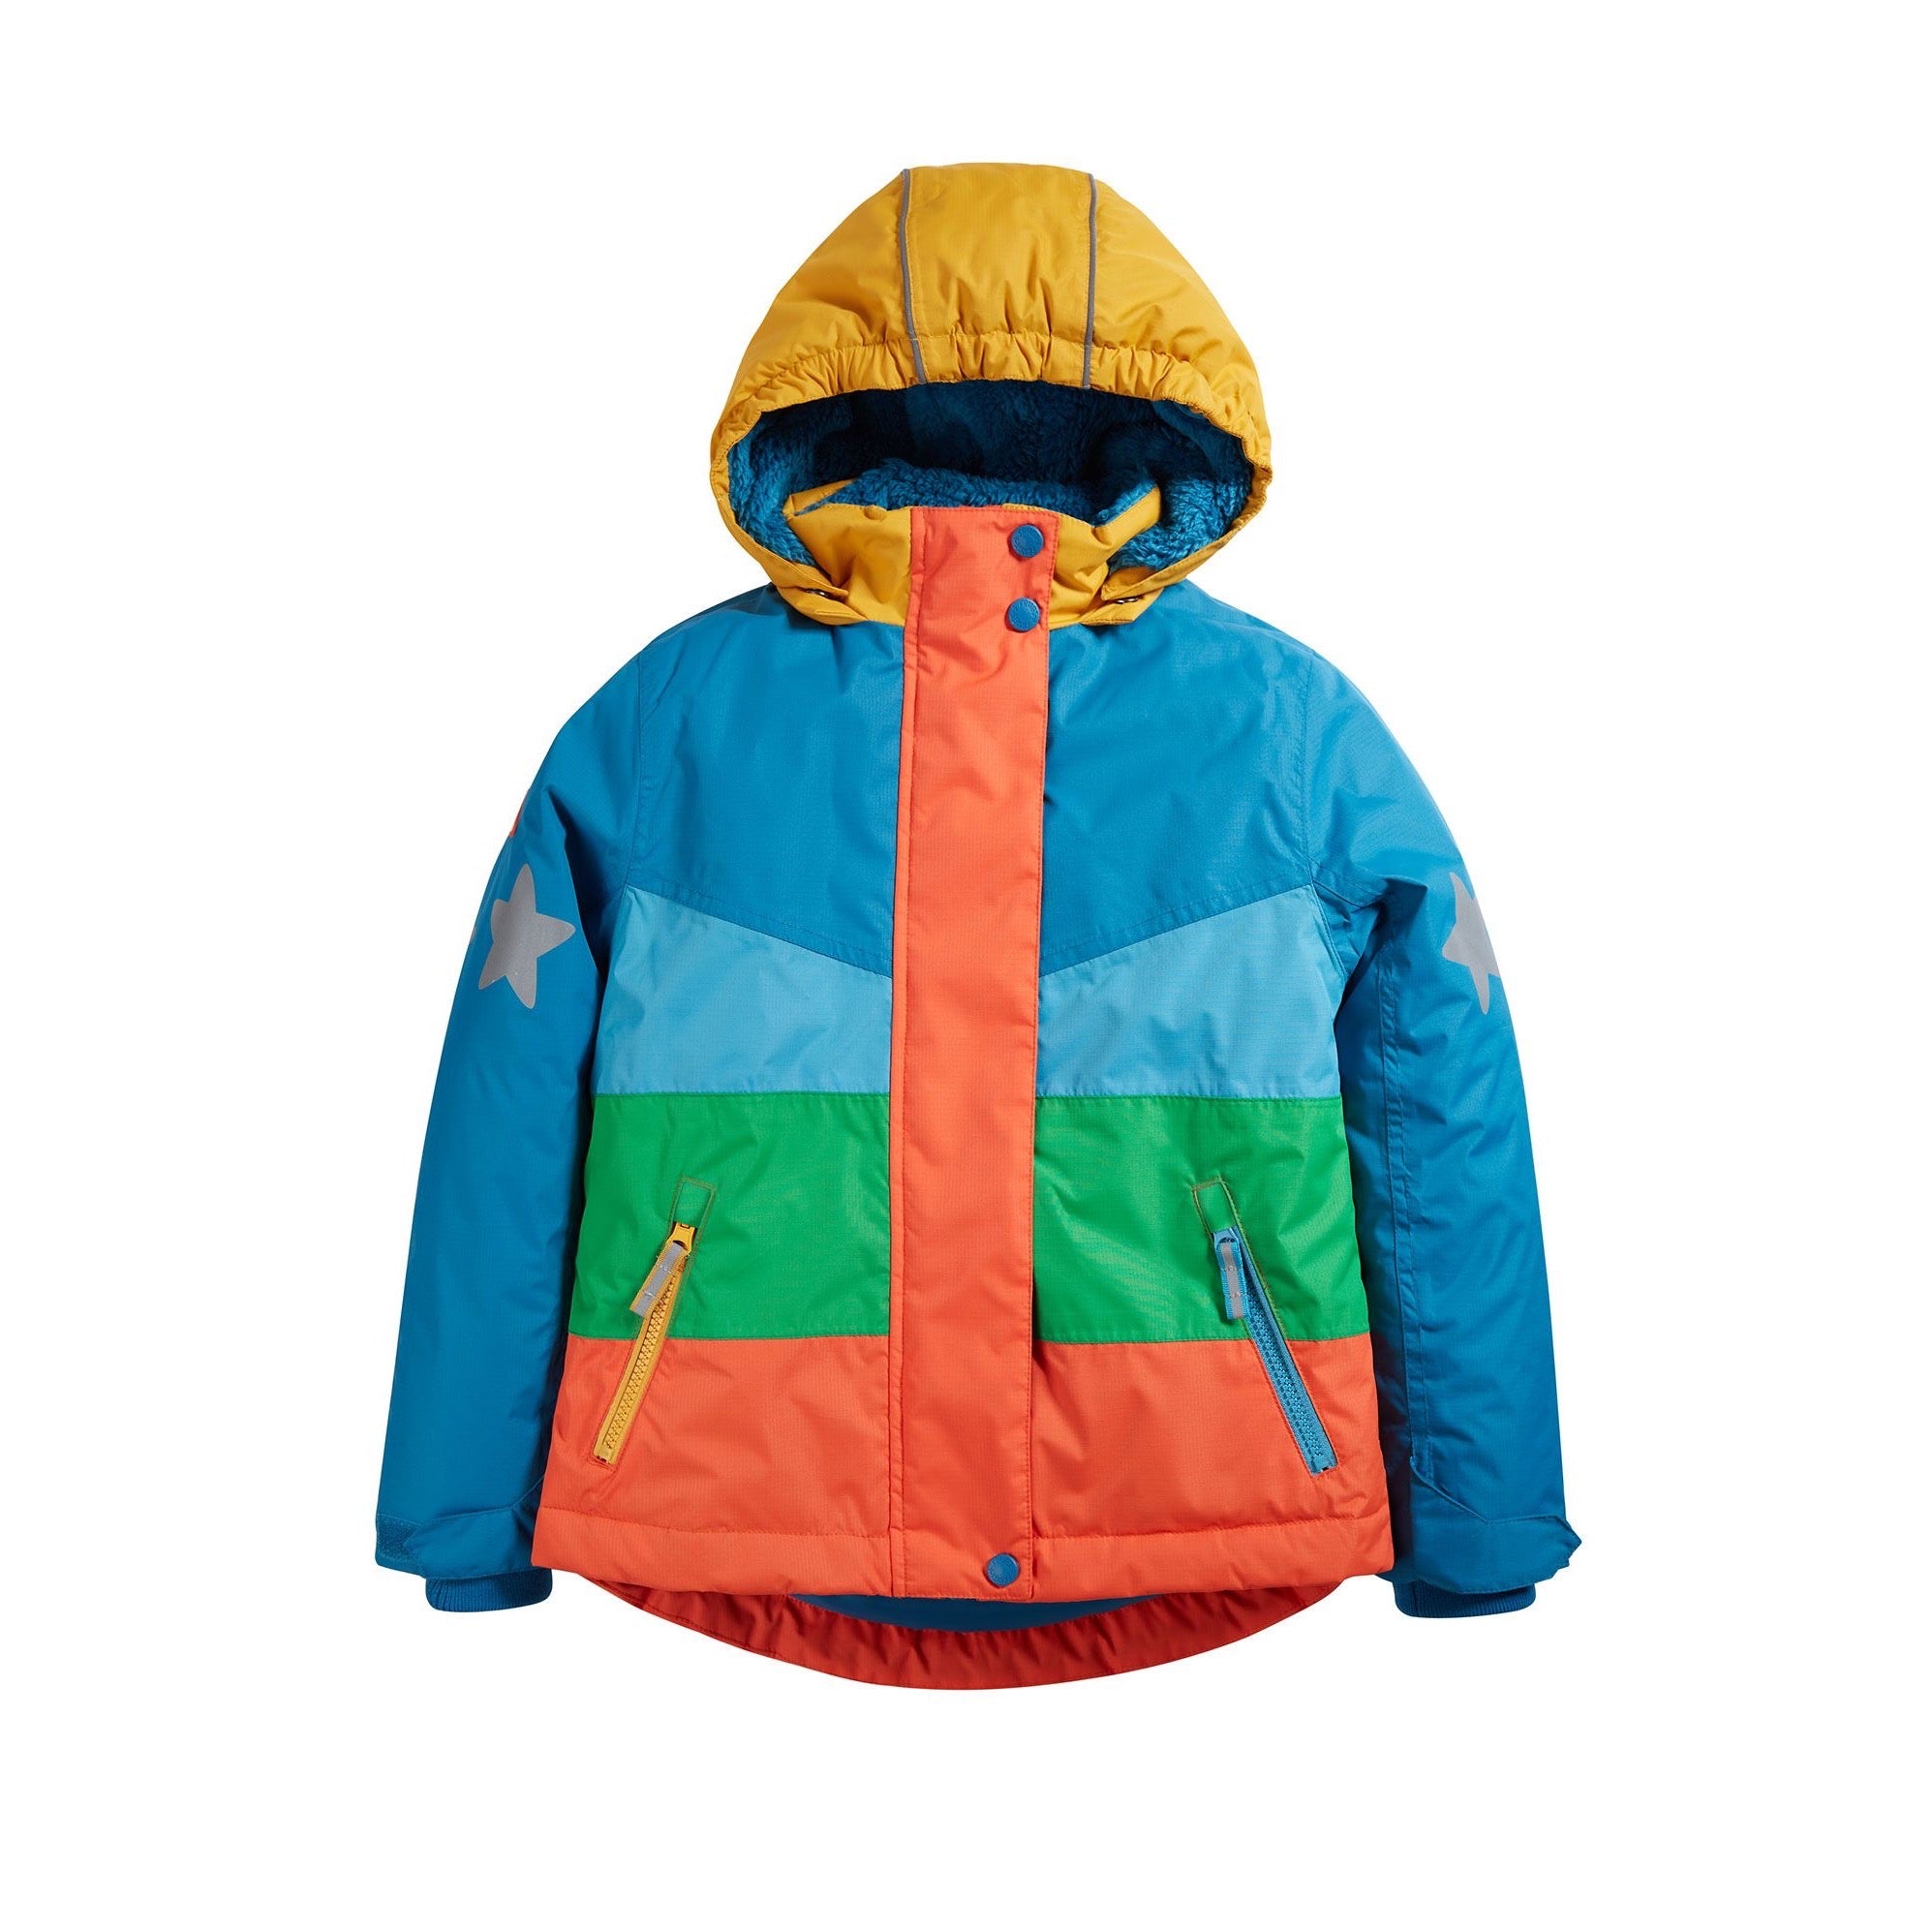 Frugi Snow And Ski Coat Chunky Colour Block Clothing 5-6YRS / Multi,6-7YRS / Multi,7-8YRS / Multi,8-9YRS / Multi